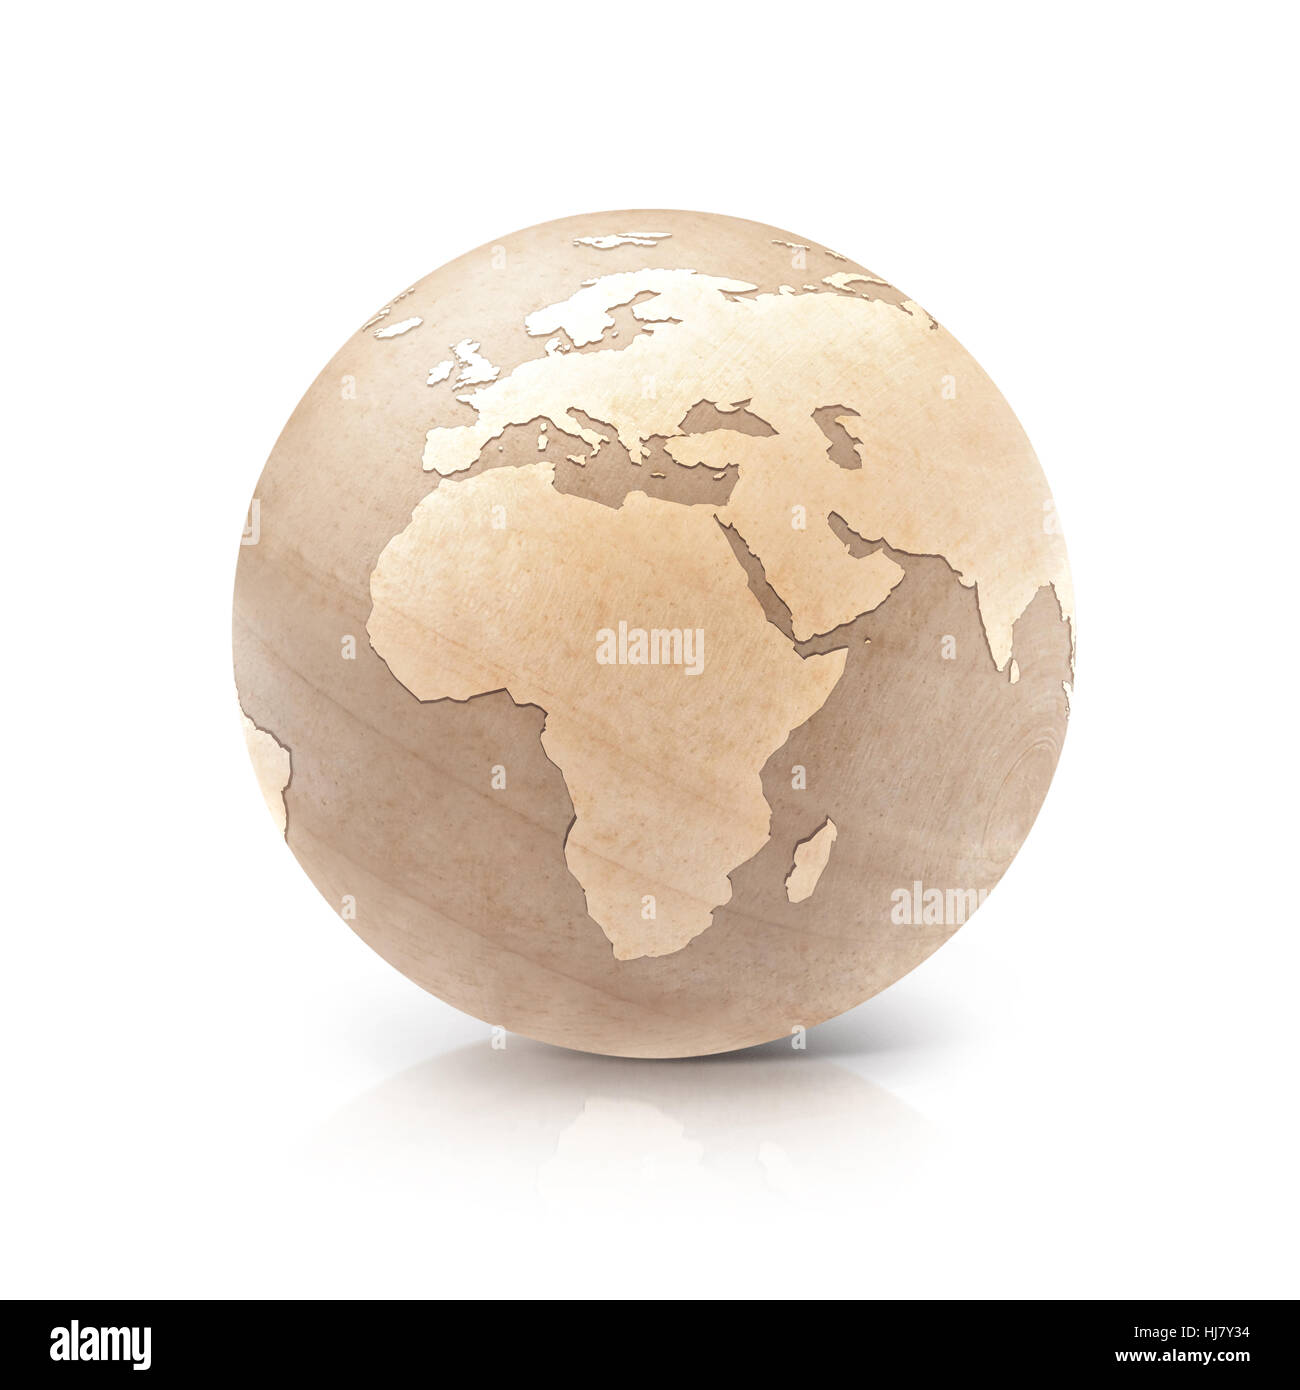 Wood globe 3D illustration europe and africa map on white background Stock Photo